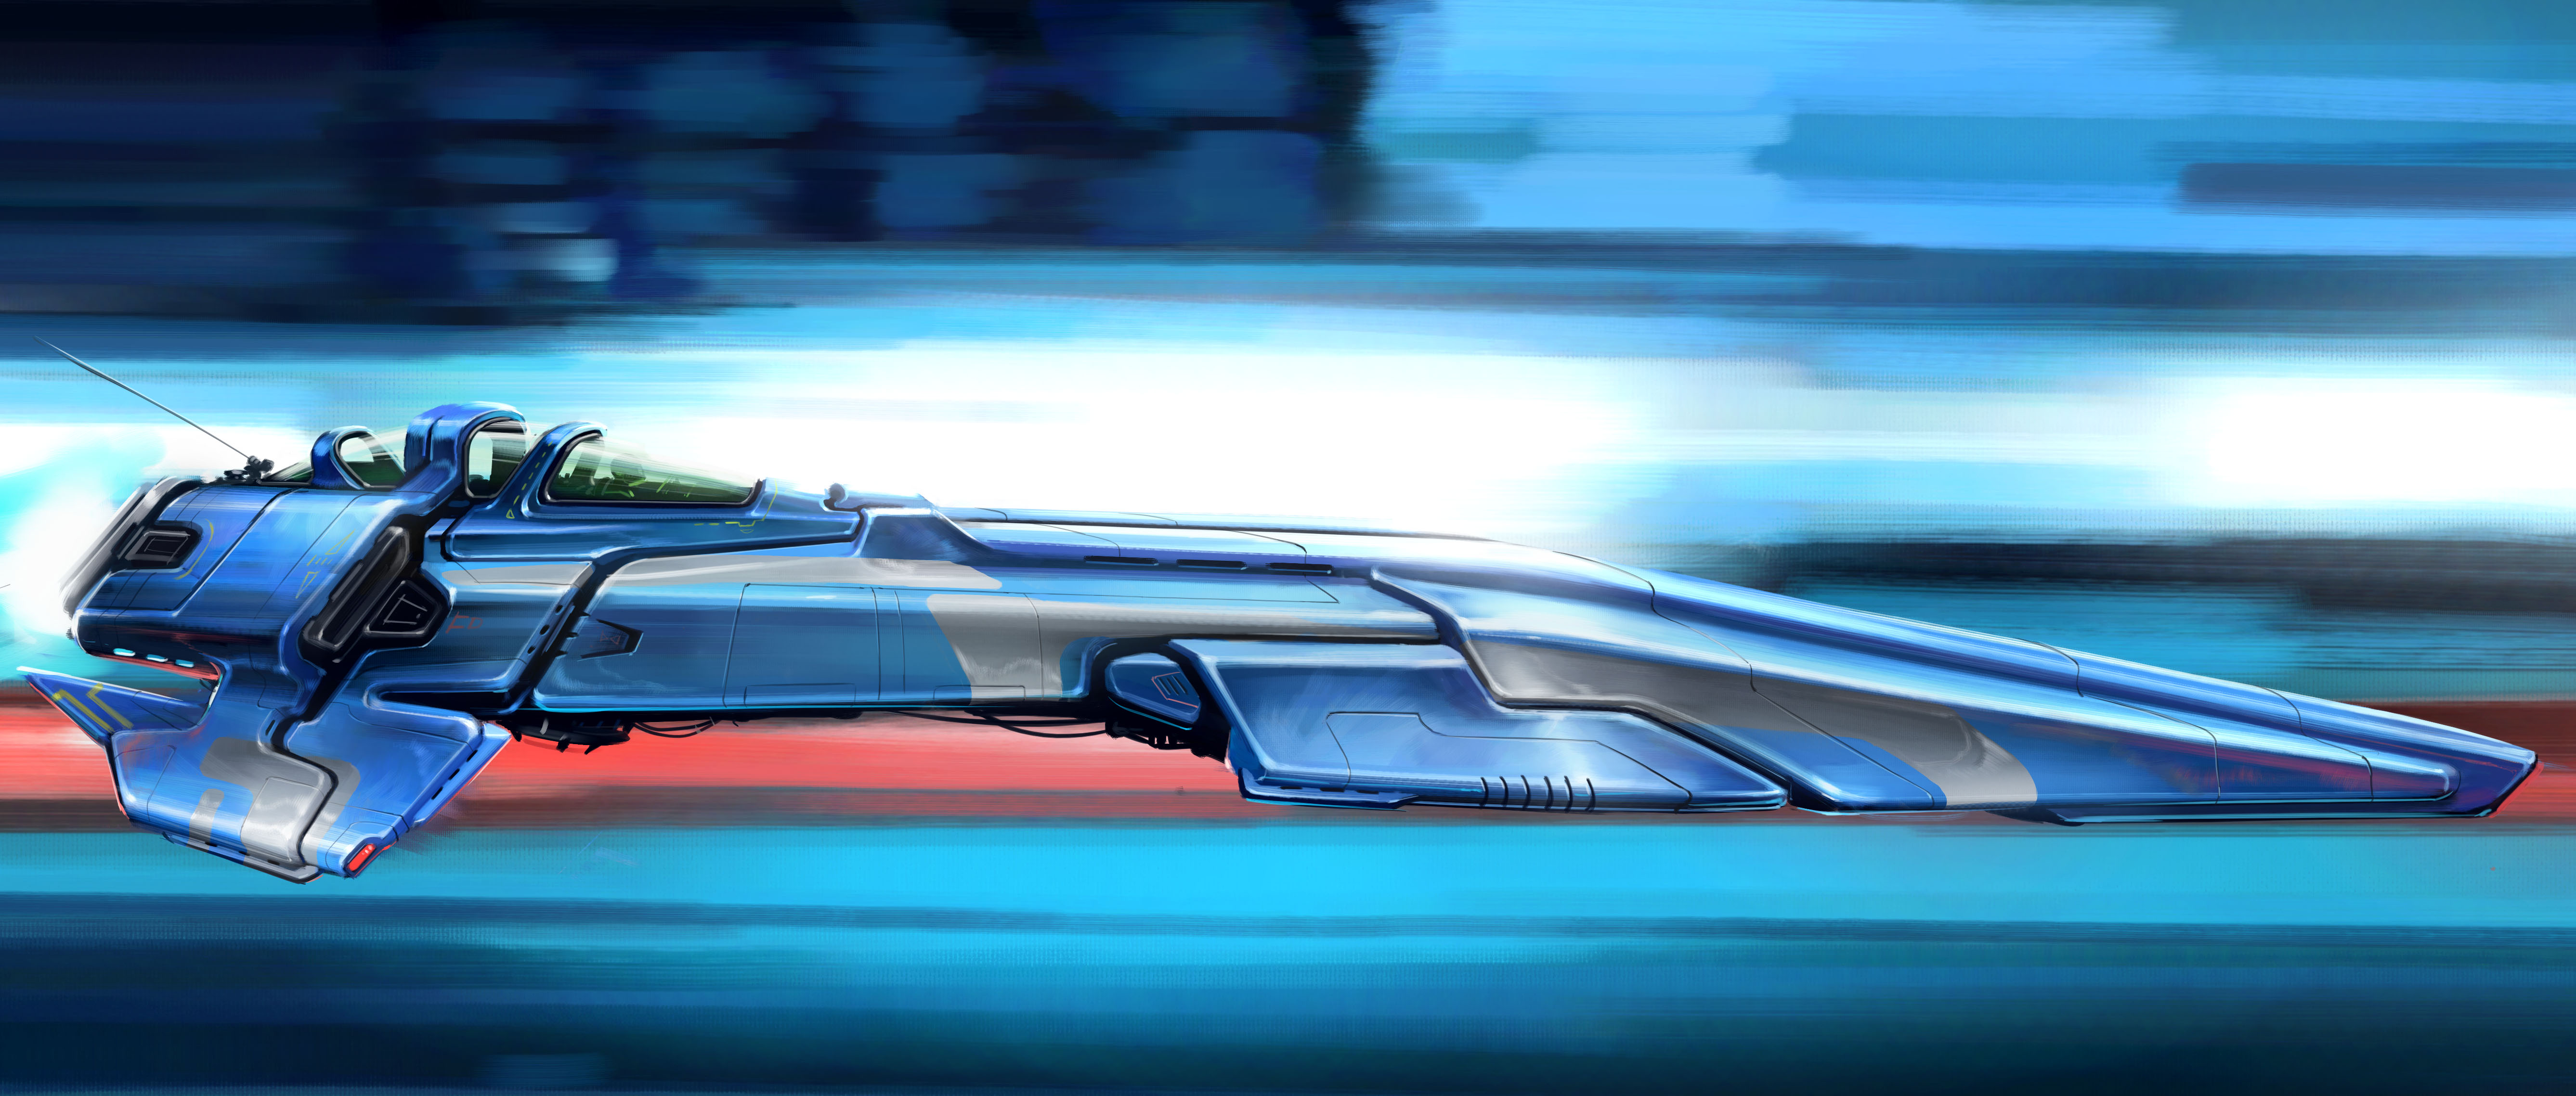 Wipeout Futuristic Concept Art Motion Blur 5350x2277